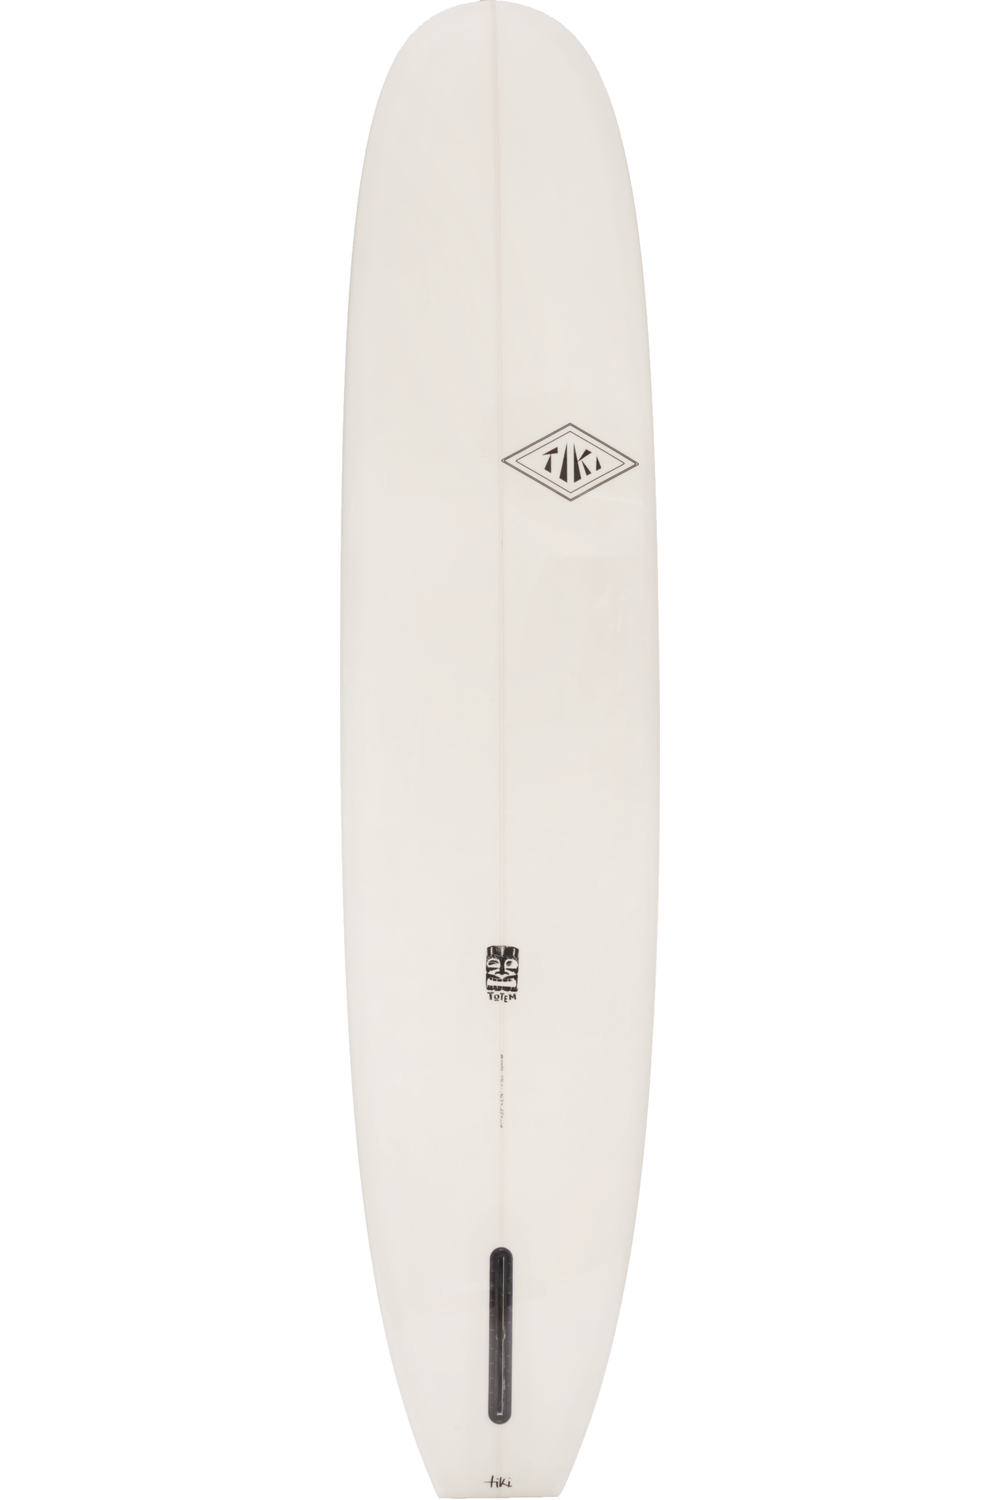 Tiki Custom Surfboard - 9'1 Totem Mal - Seacrest Grey